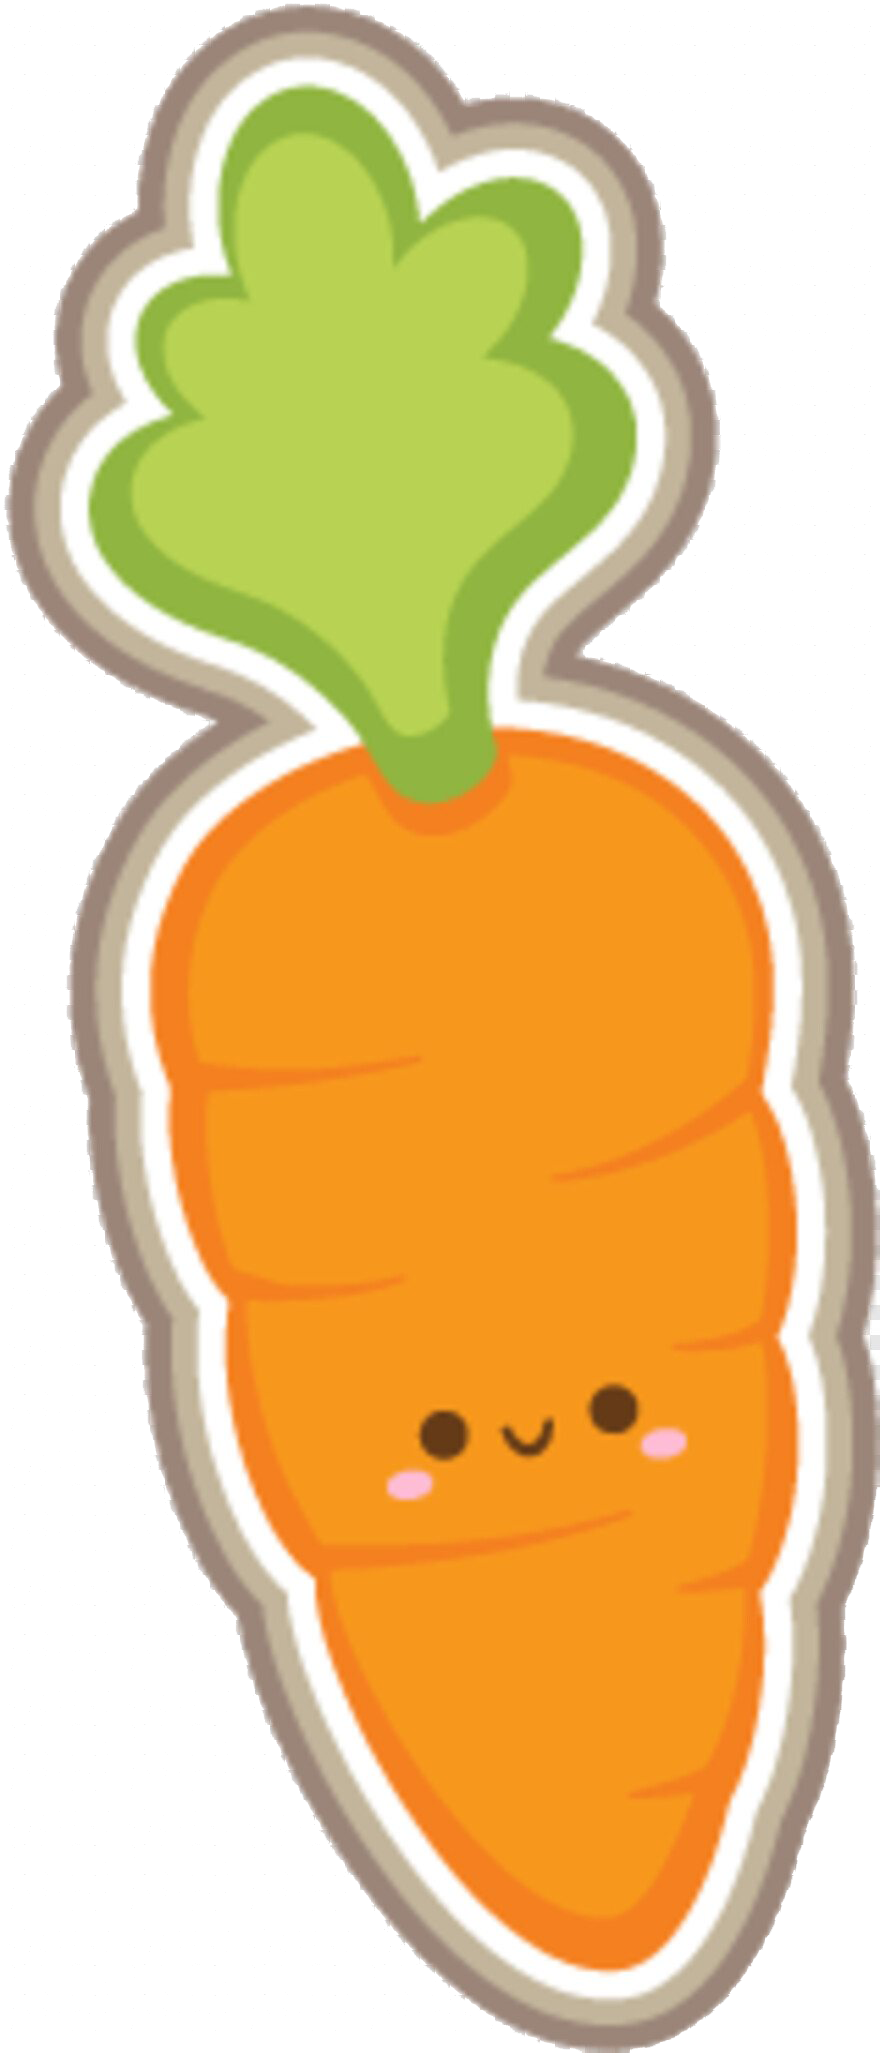 Cute Carrot Transparent Image